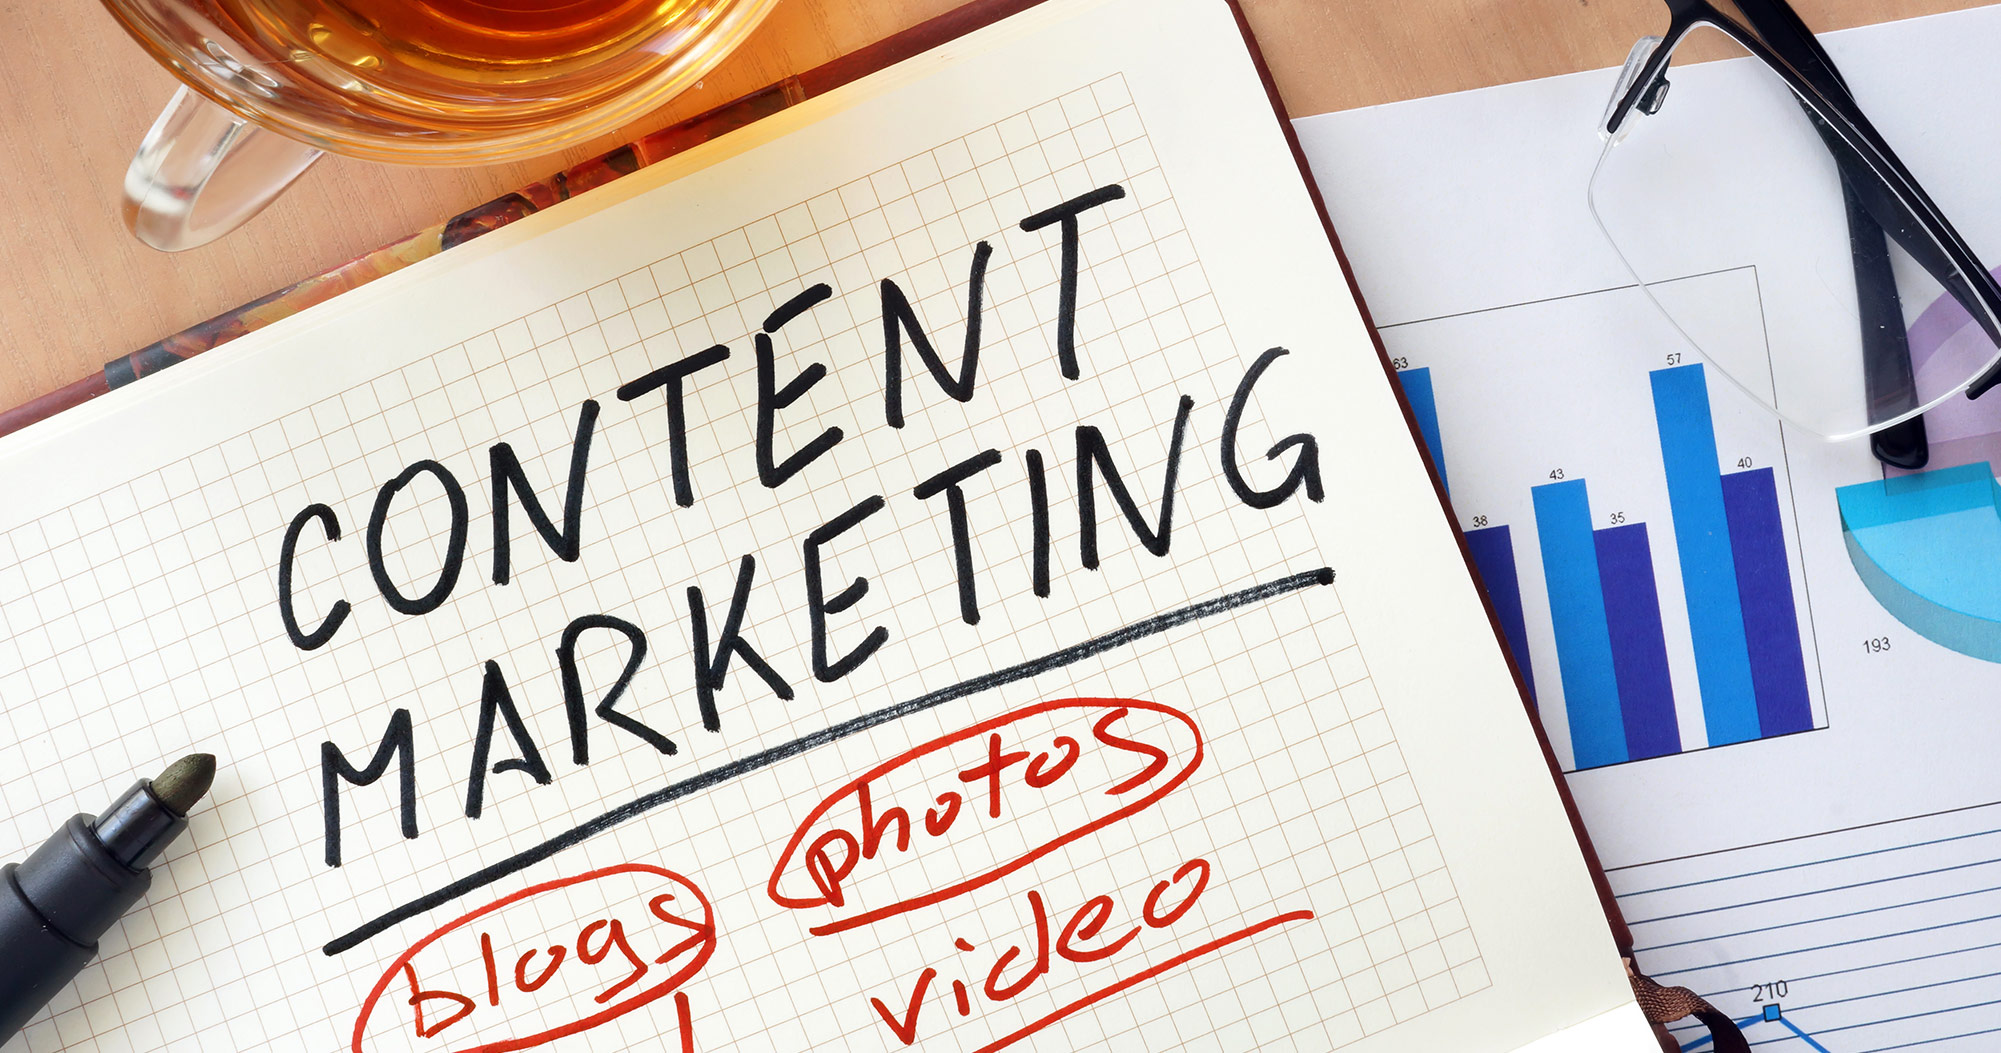 A1 content. Контент. Content marketing. 4c marketing.